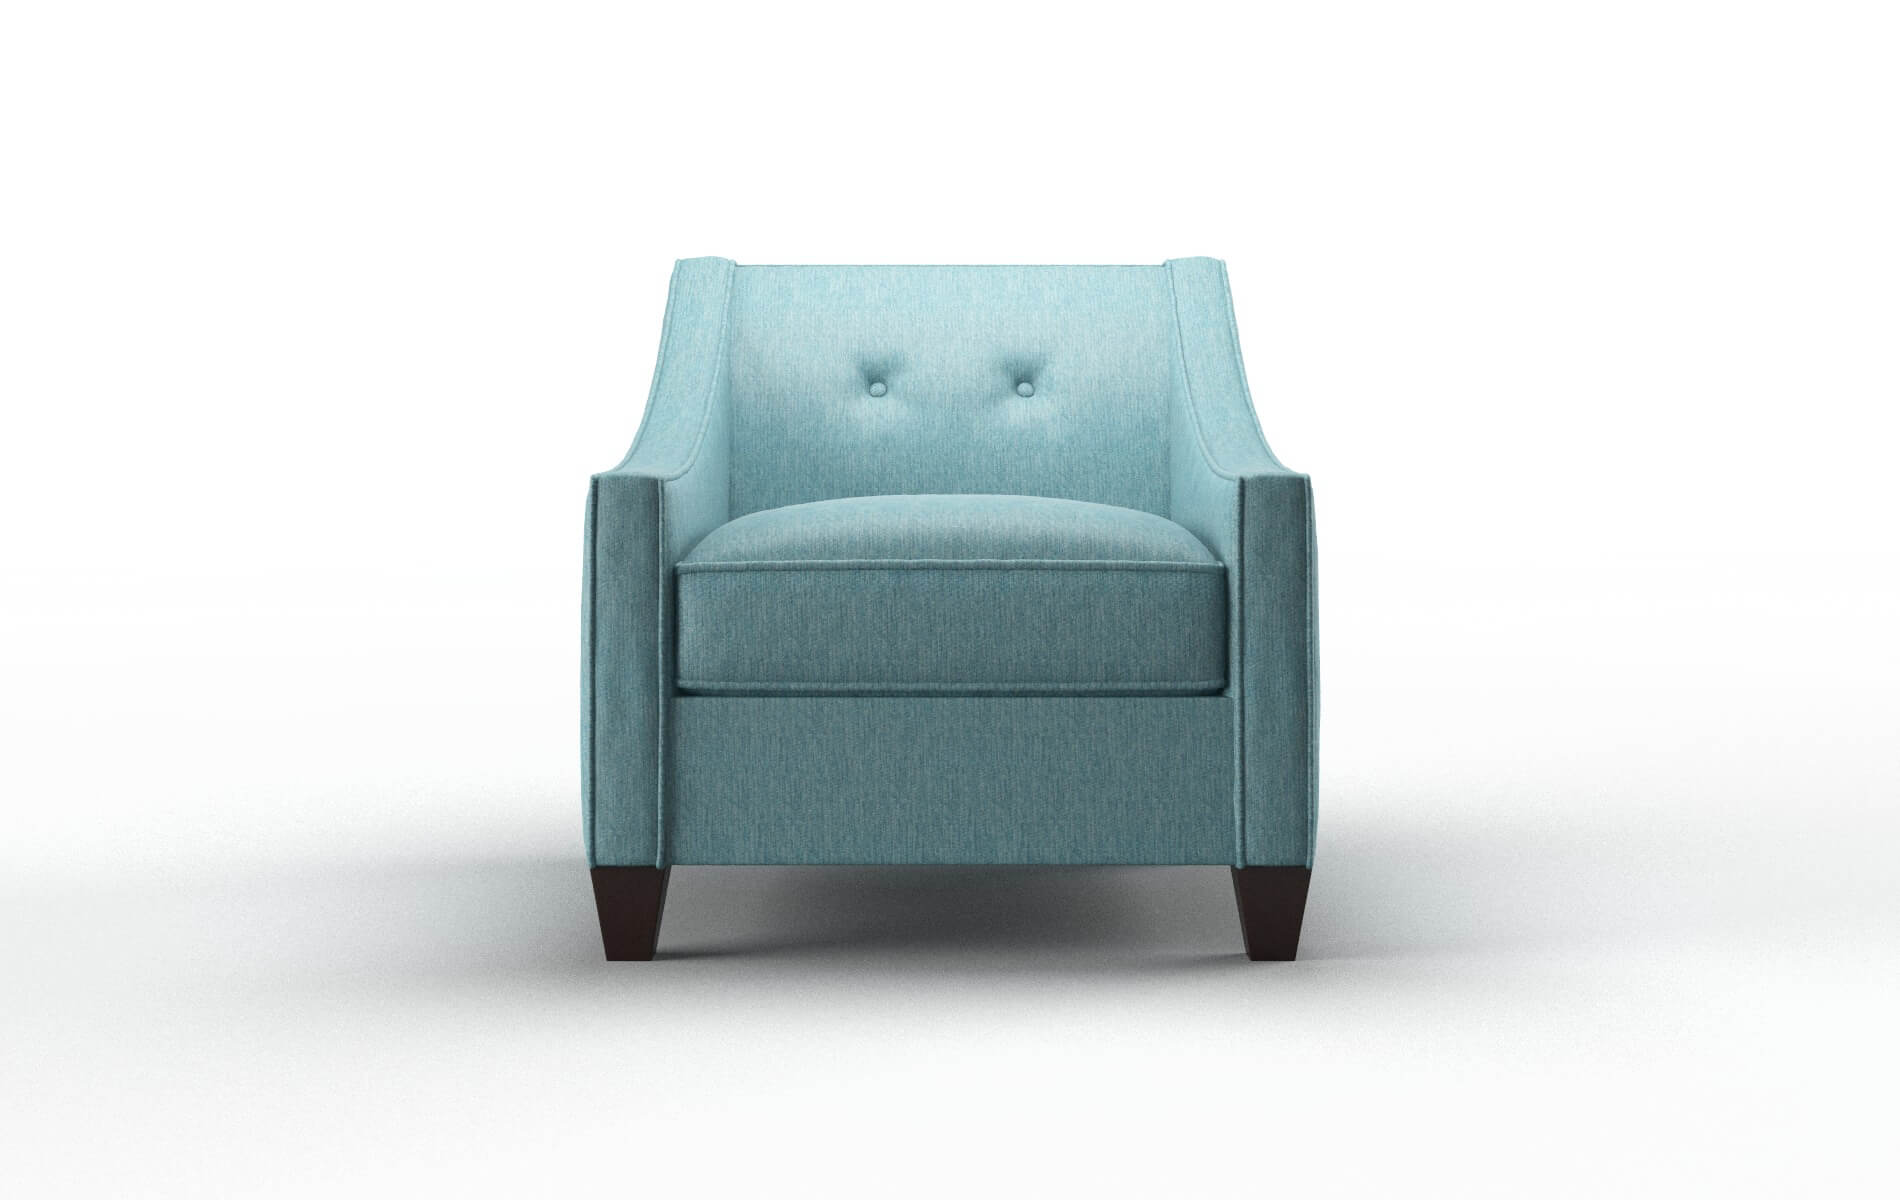 Berlin Cosmo Turquoise chair espresso legs